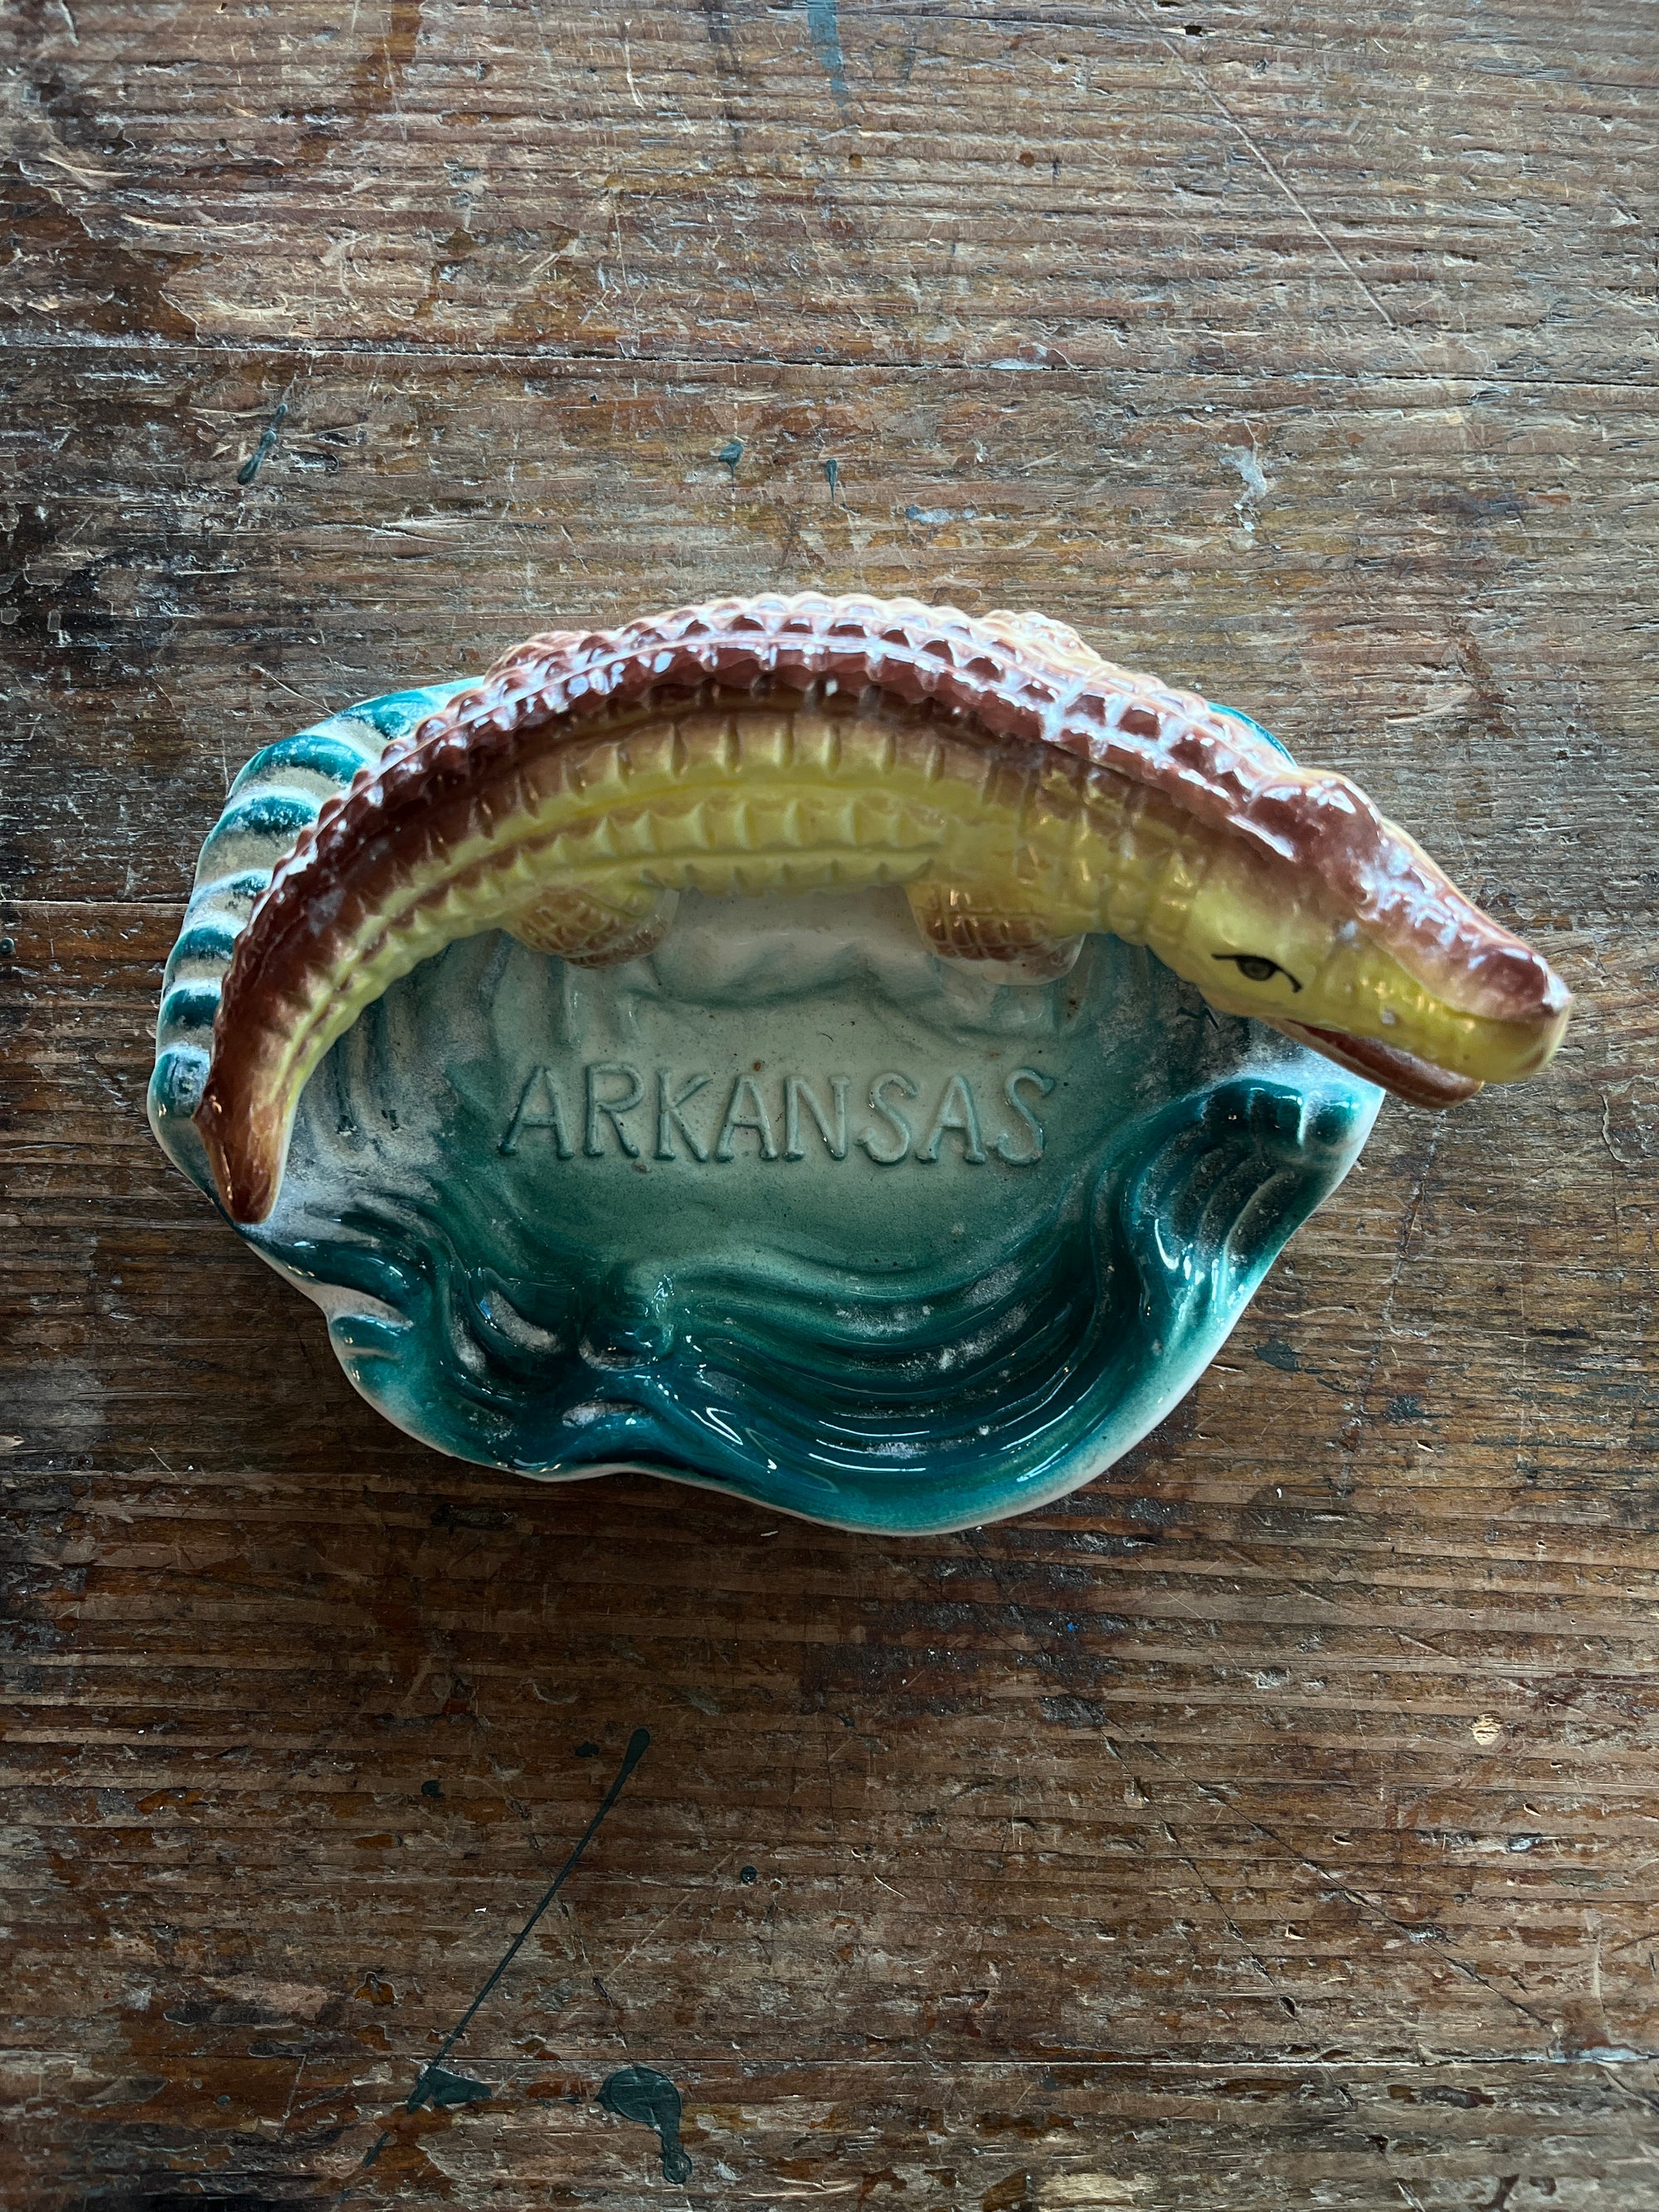 Arkansas Alligator Dish